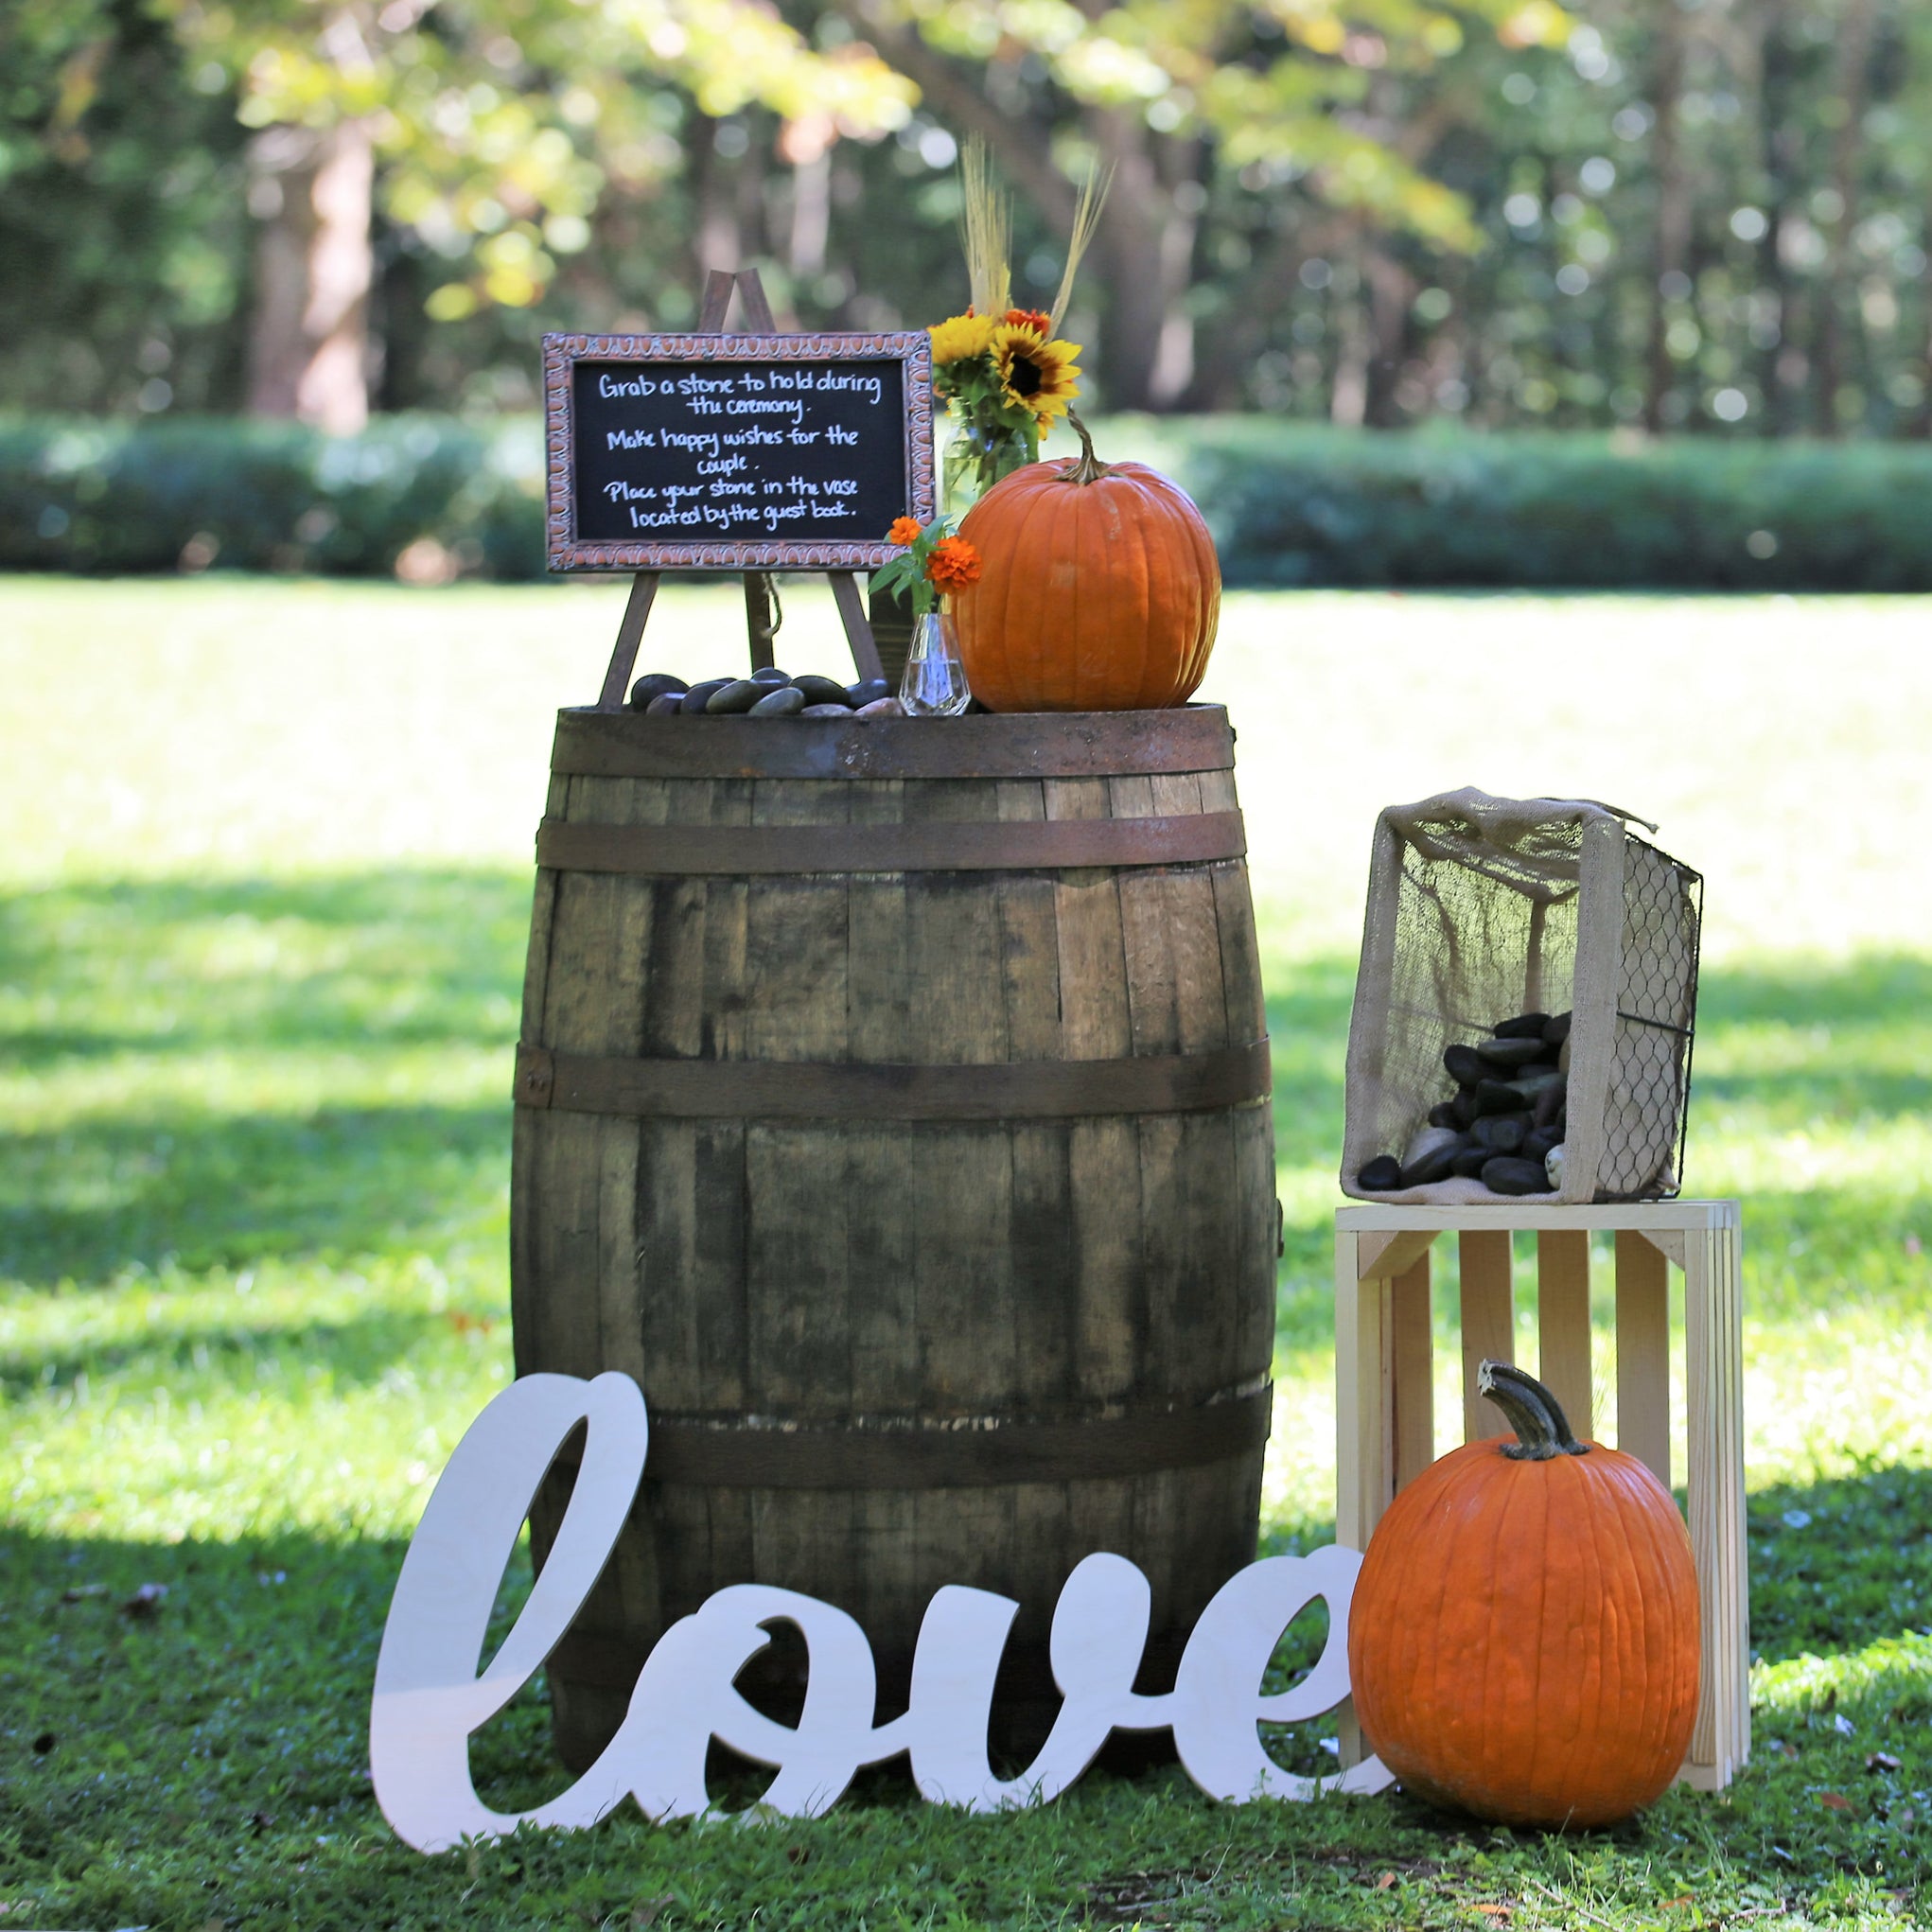 Whiskey or Wine Barrel Event Decor Rental - The Wedding Shop